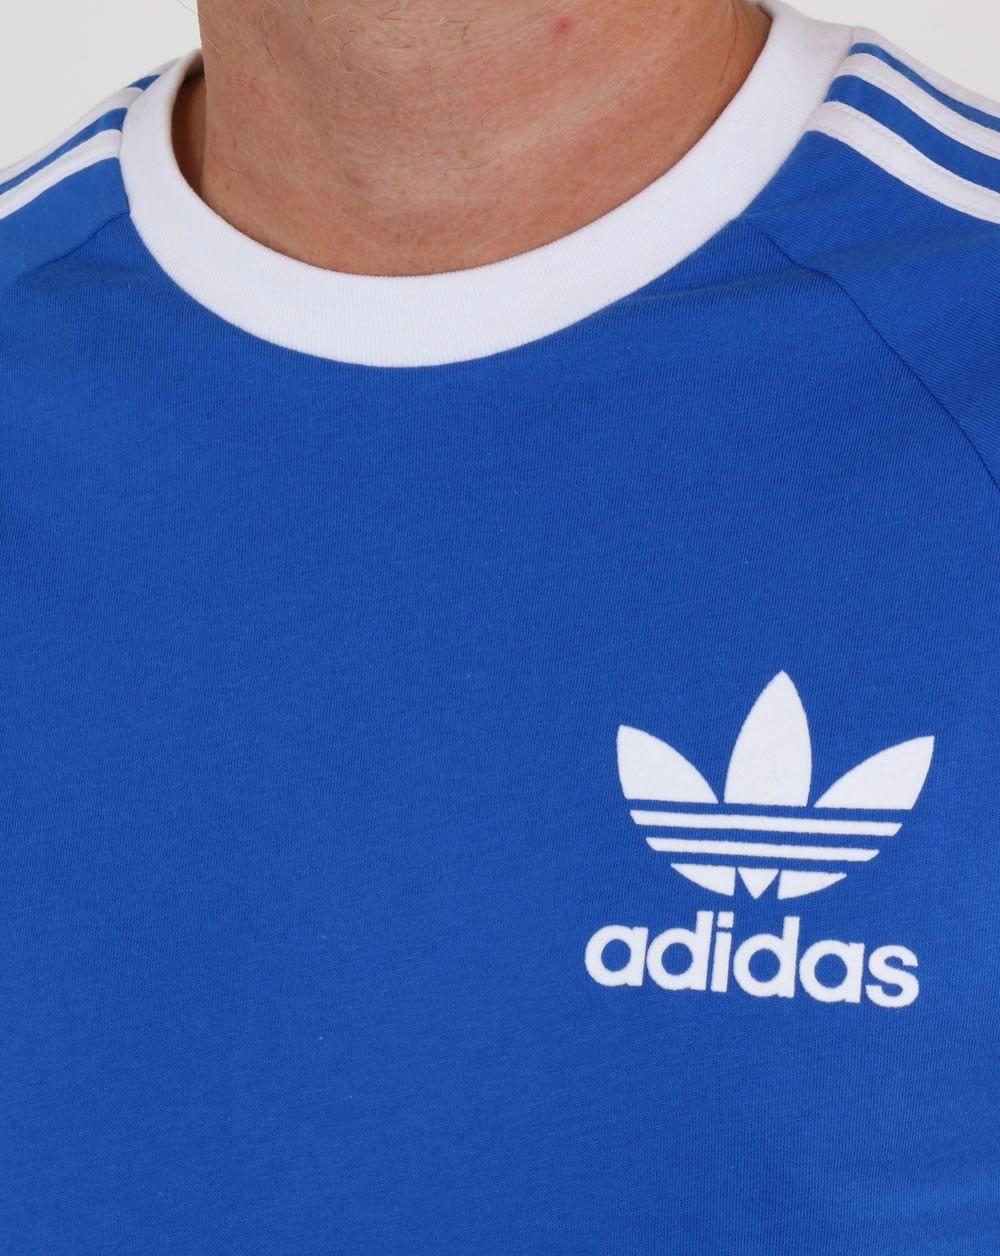 White and Blue T Logo - Adidas T Shirt, blue, California, 3 stripes,originals,mens, tee, royal